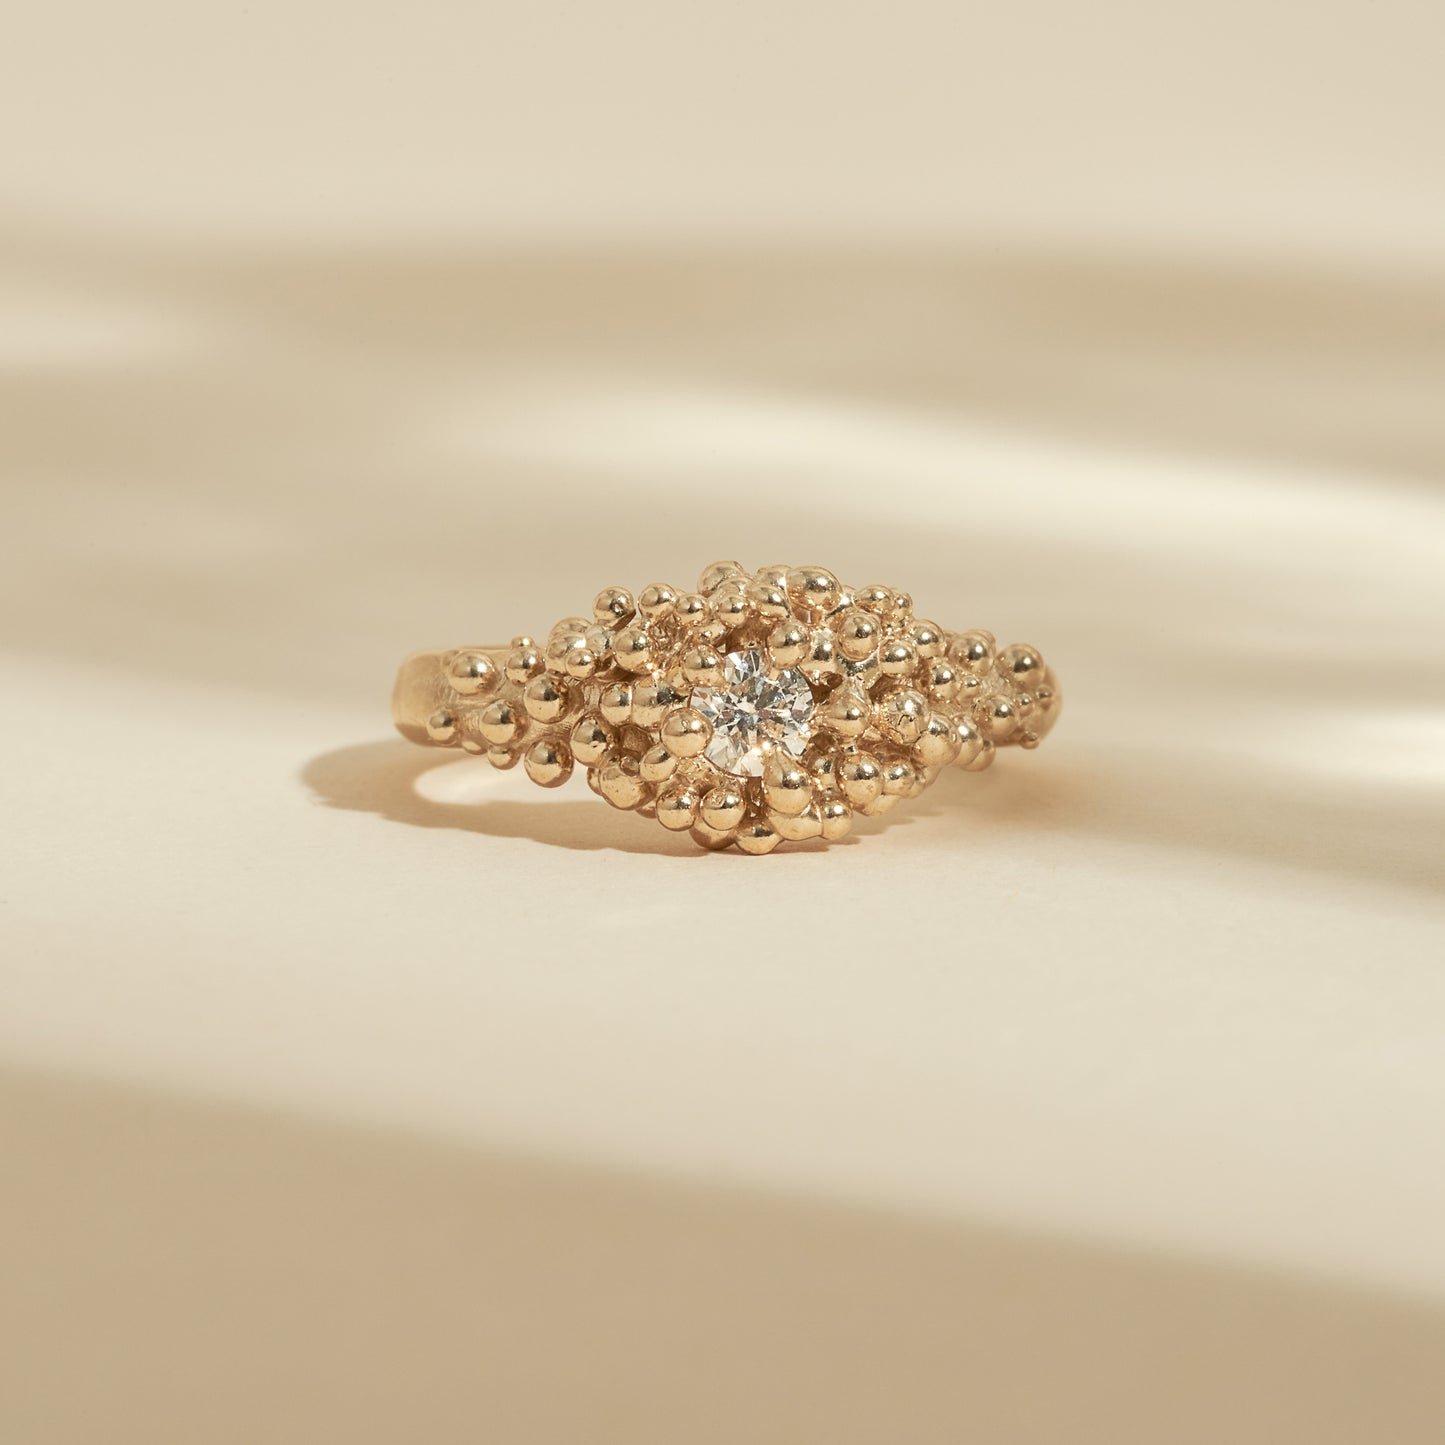 Golden Hour Ring with 3.5mm Ocean Diamond.